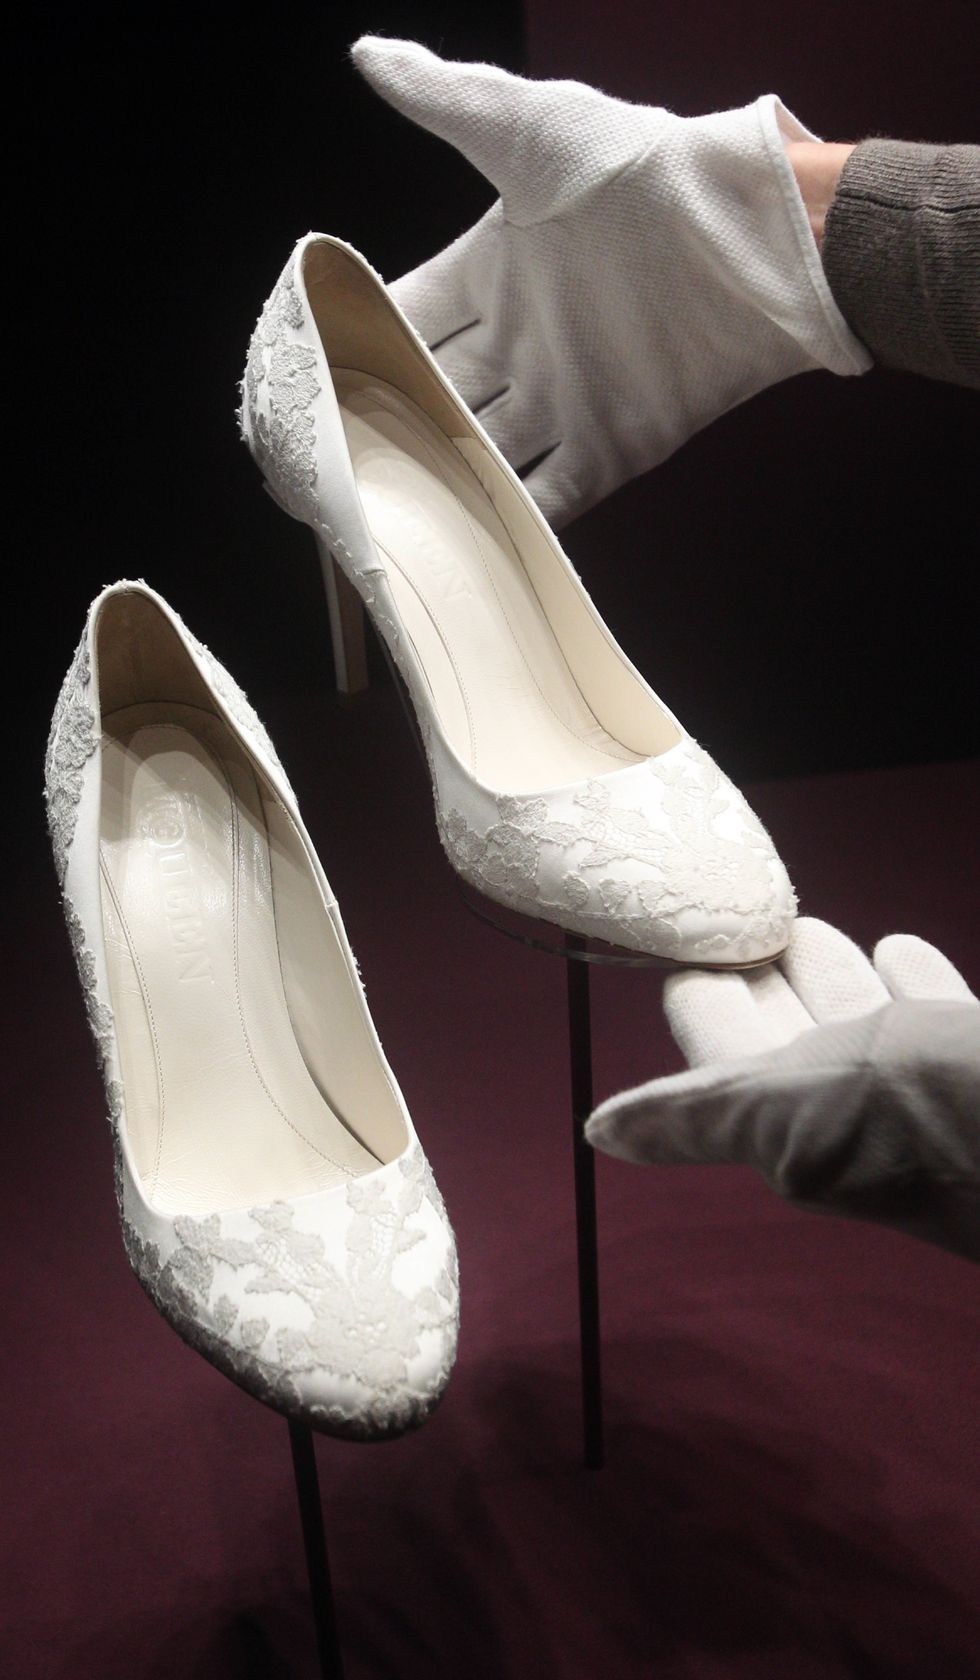 White, High heels, Fashion, Tan, Beige, Ivory, Close-up, Dancing shoe, Bridal shoe, Basic pump, 